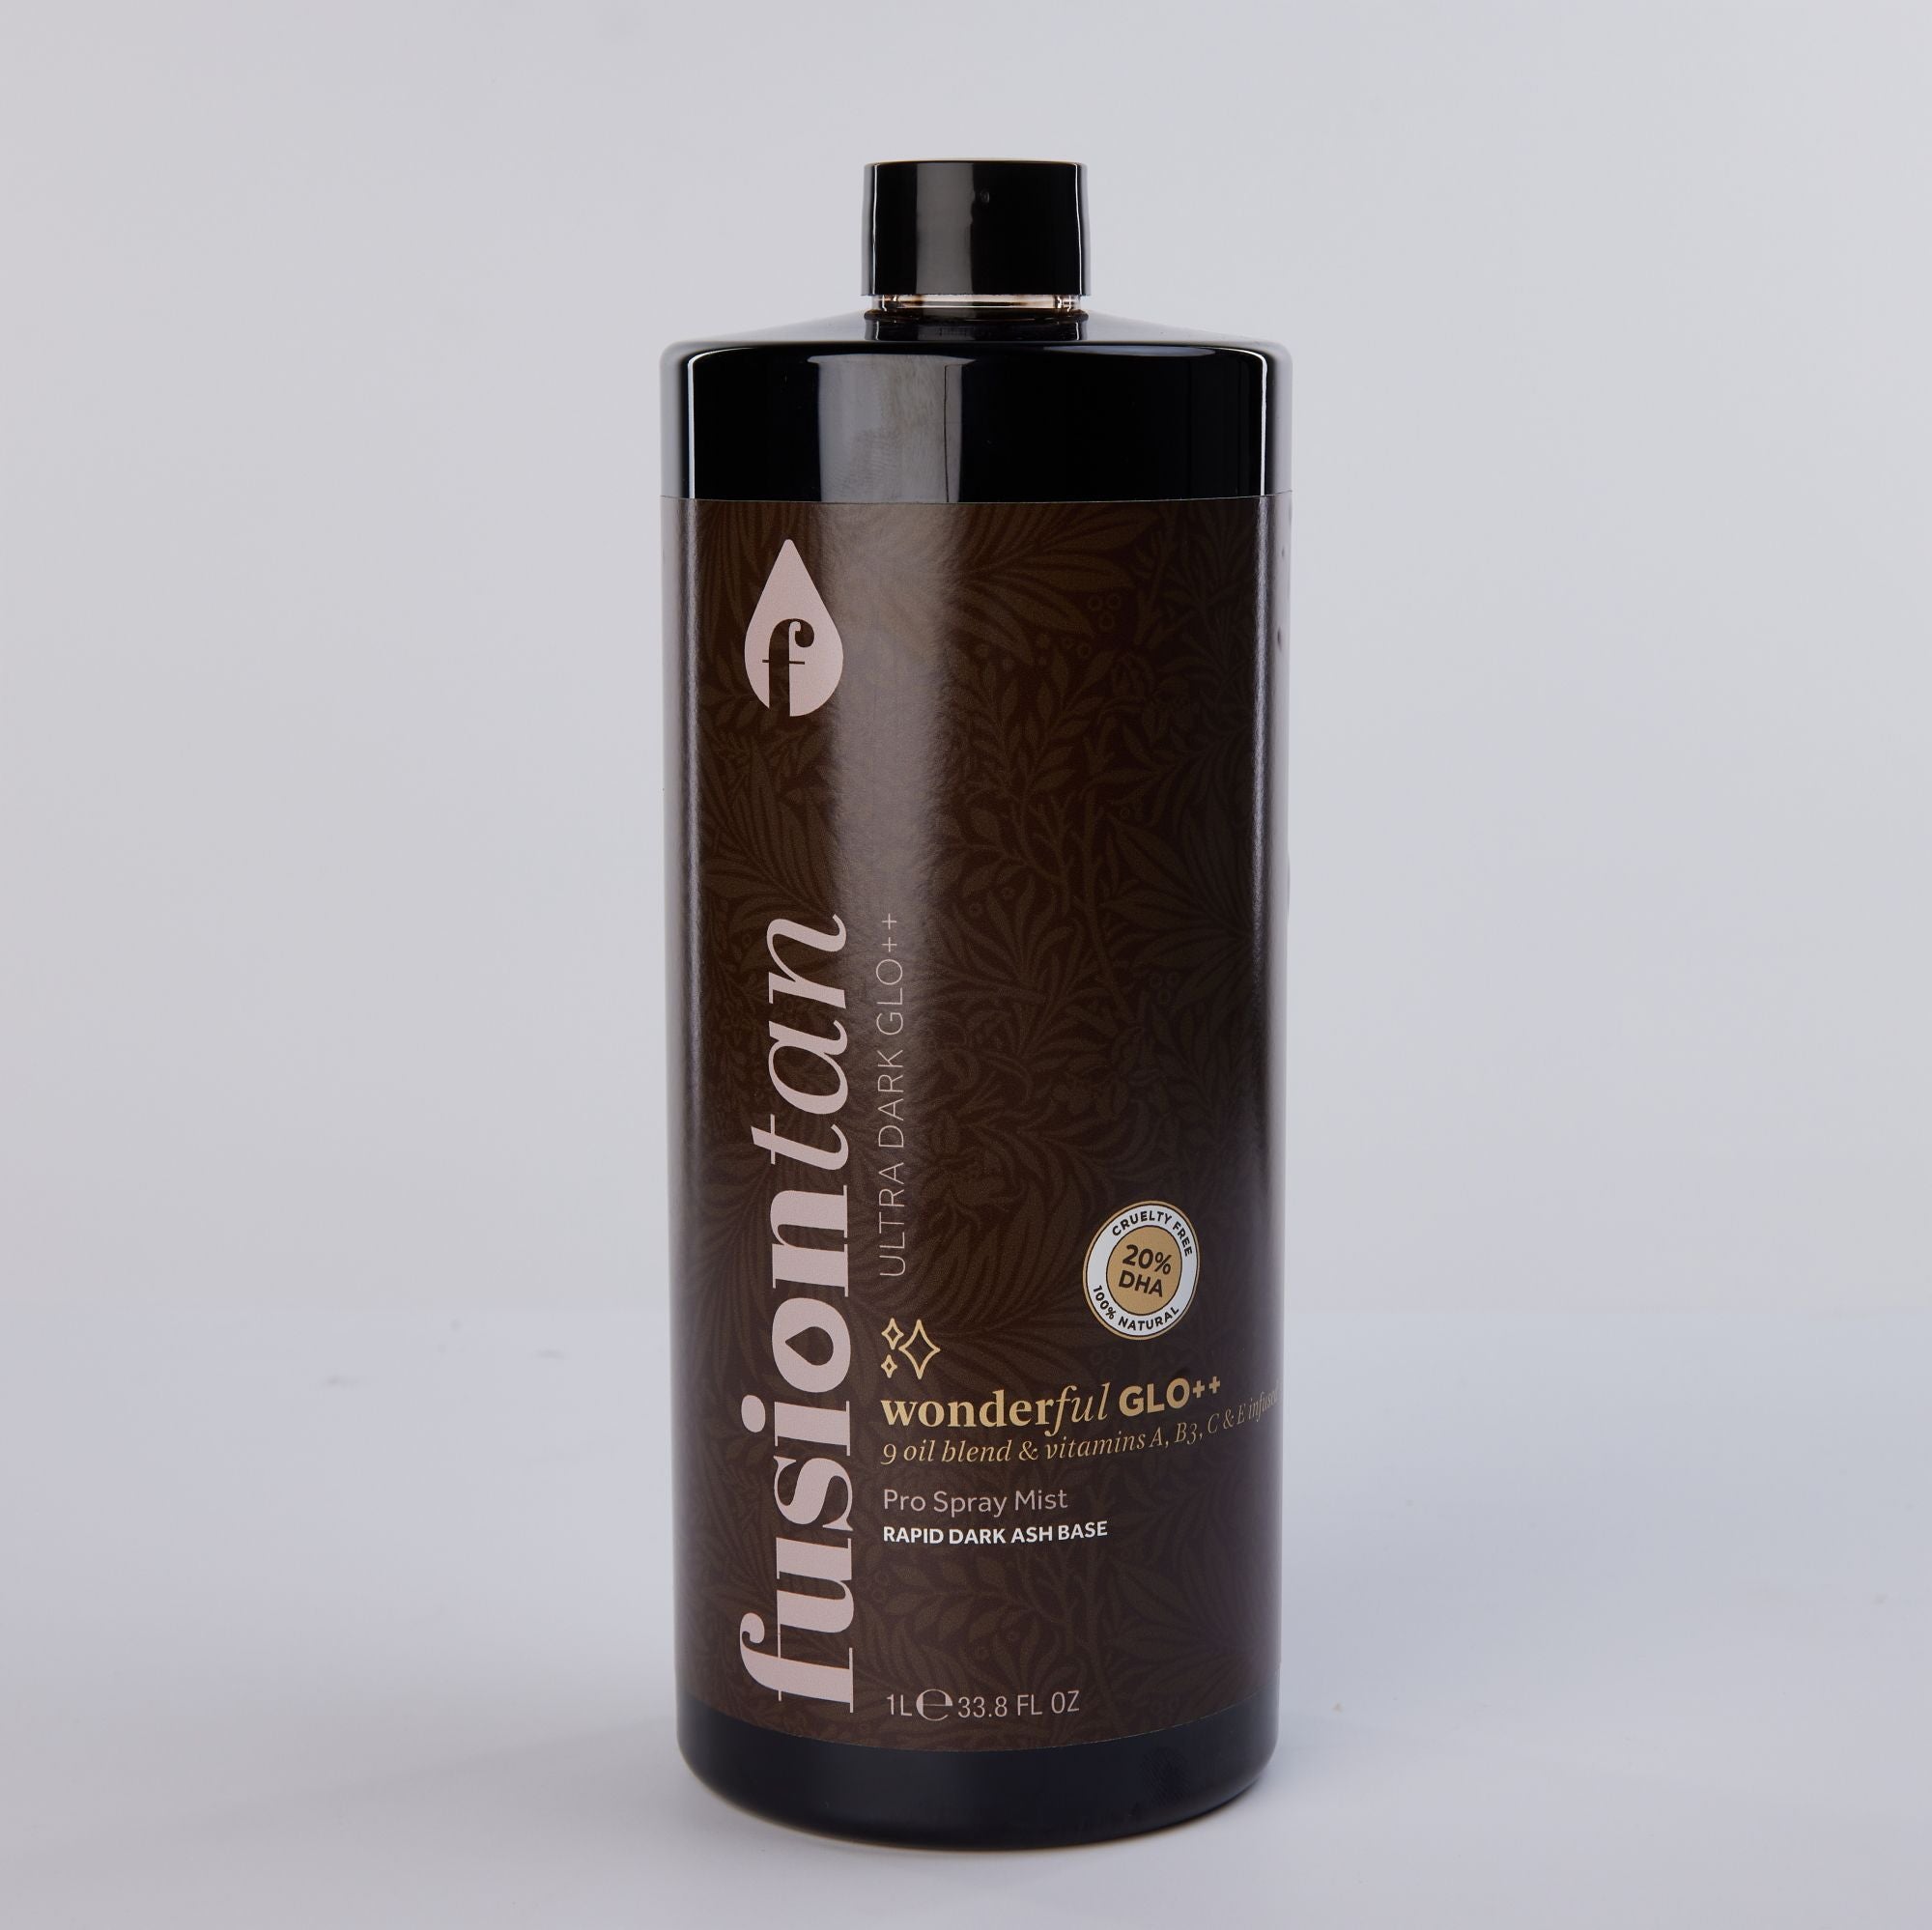 Fusion Tan - Pro Spray Tan Mist Wonderful Glo+ 20% (Dark Ash) 1 Litre